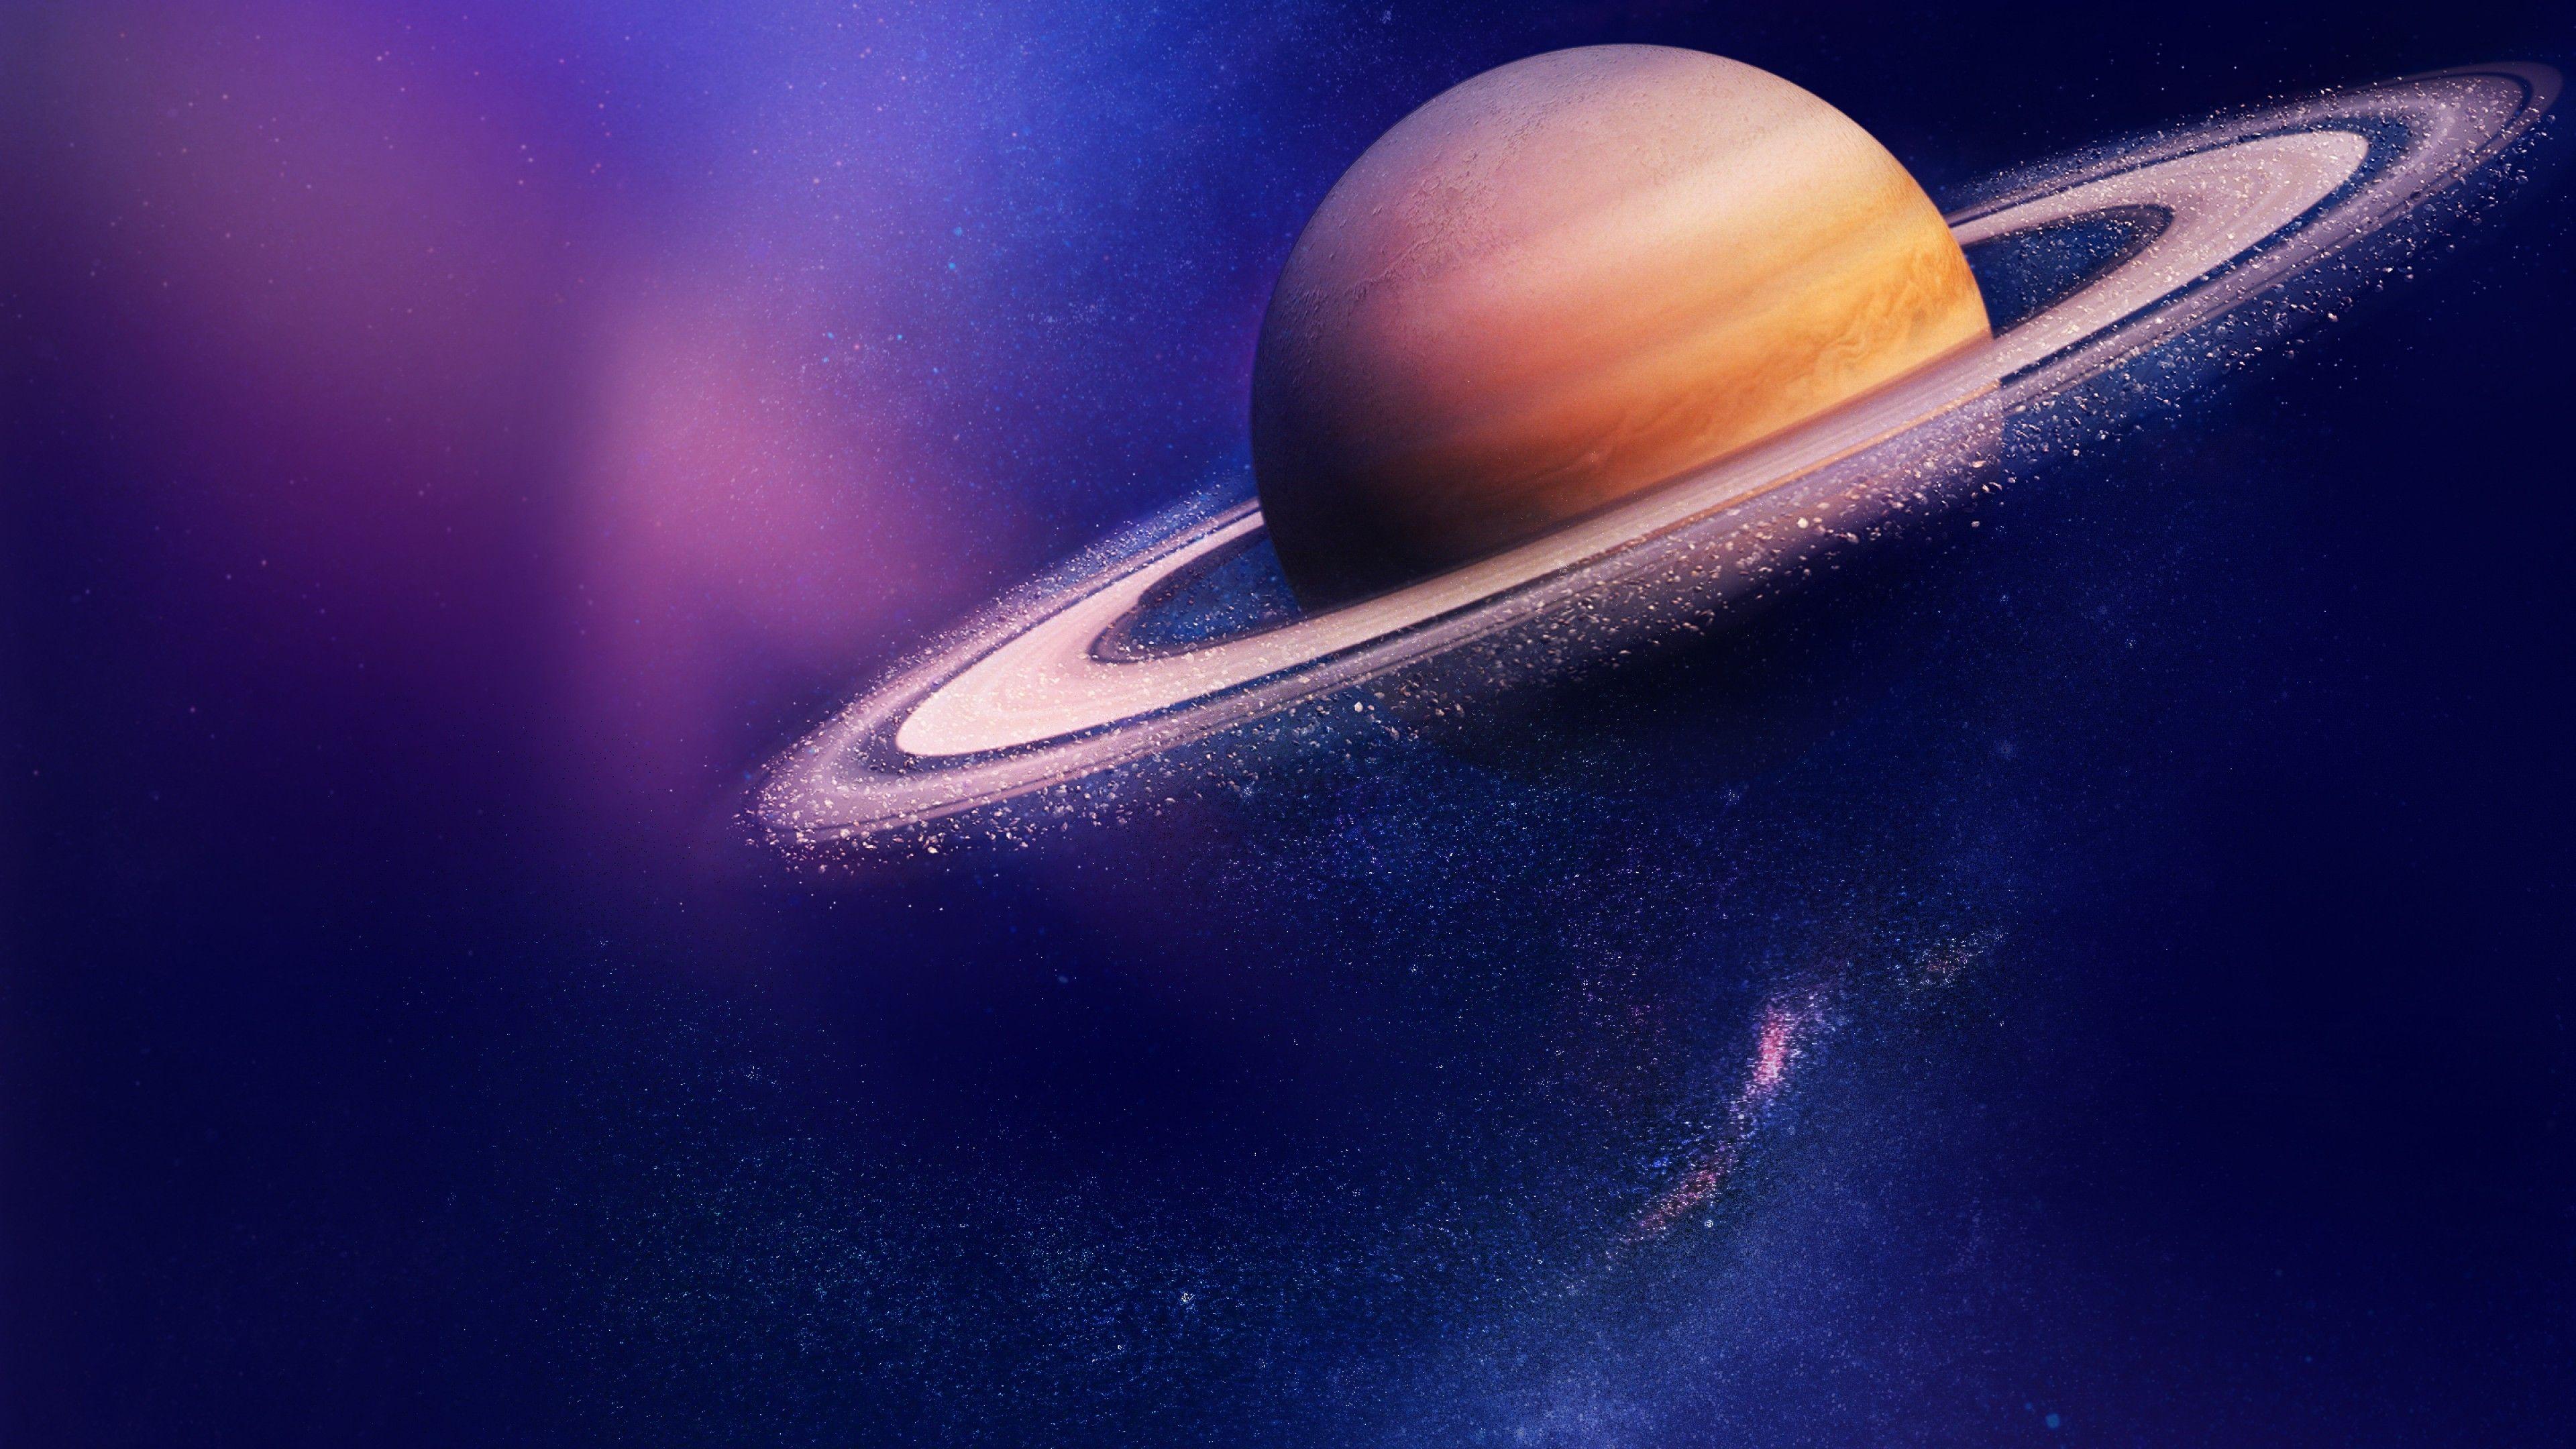 Cassini Saturn 4k Wallpapers Top Free Cassini Saturn 4k Backgrounds Wallpaperaccess 4212